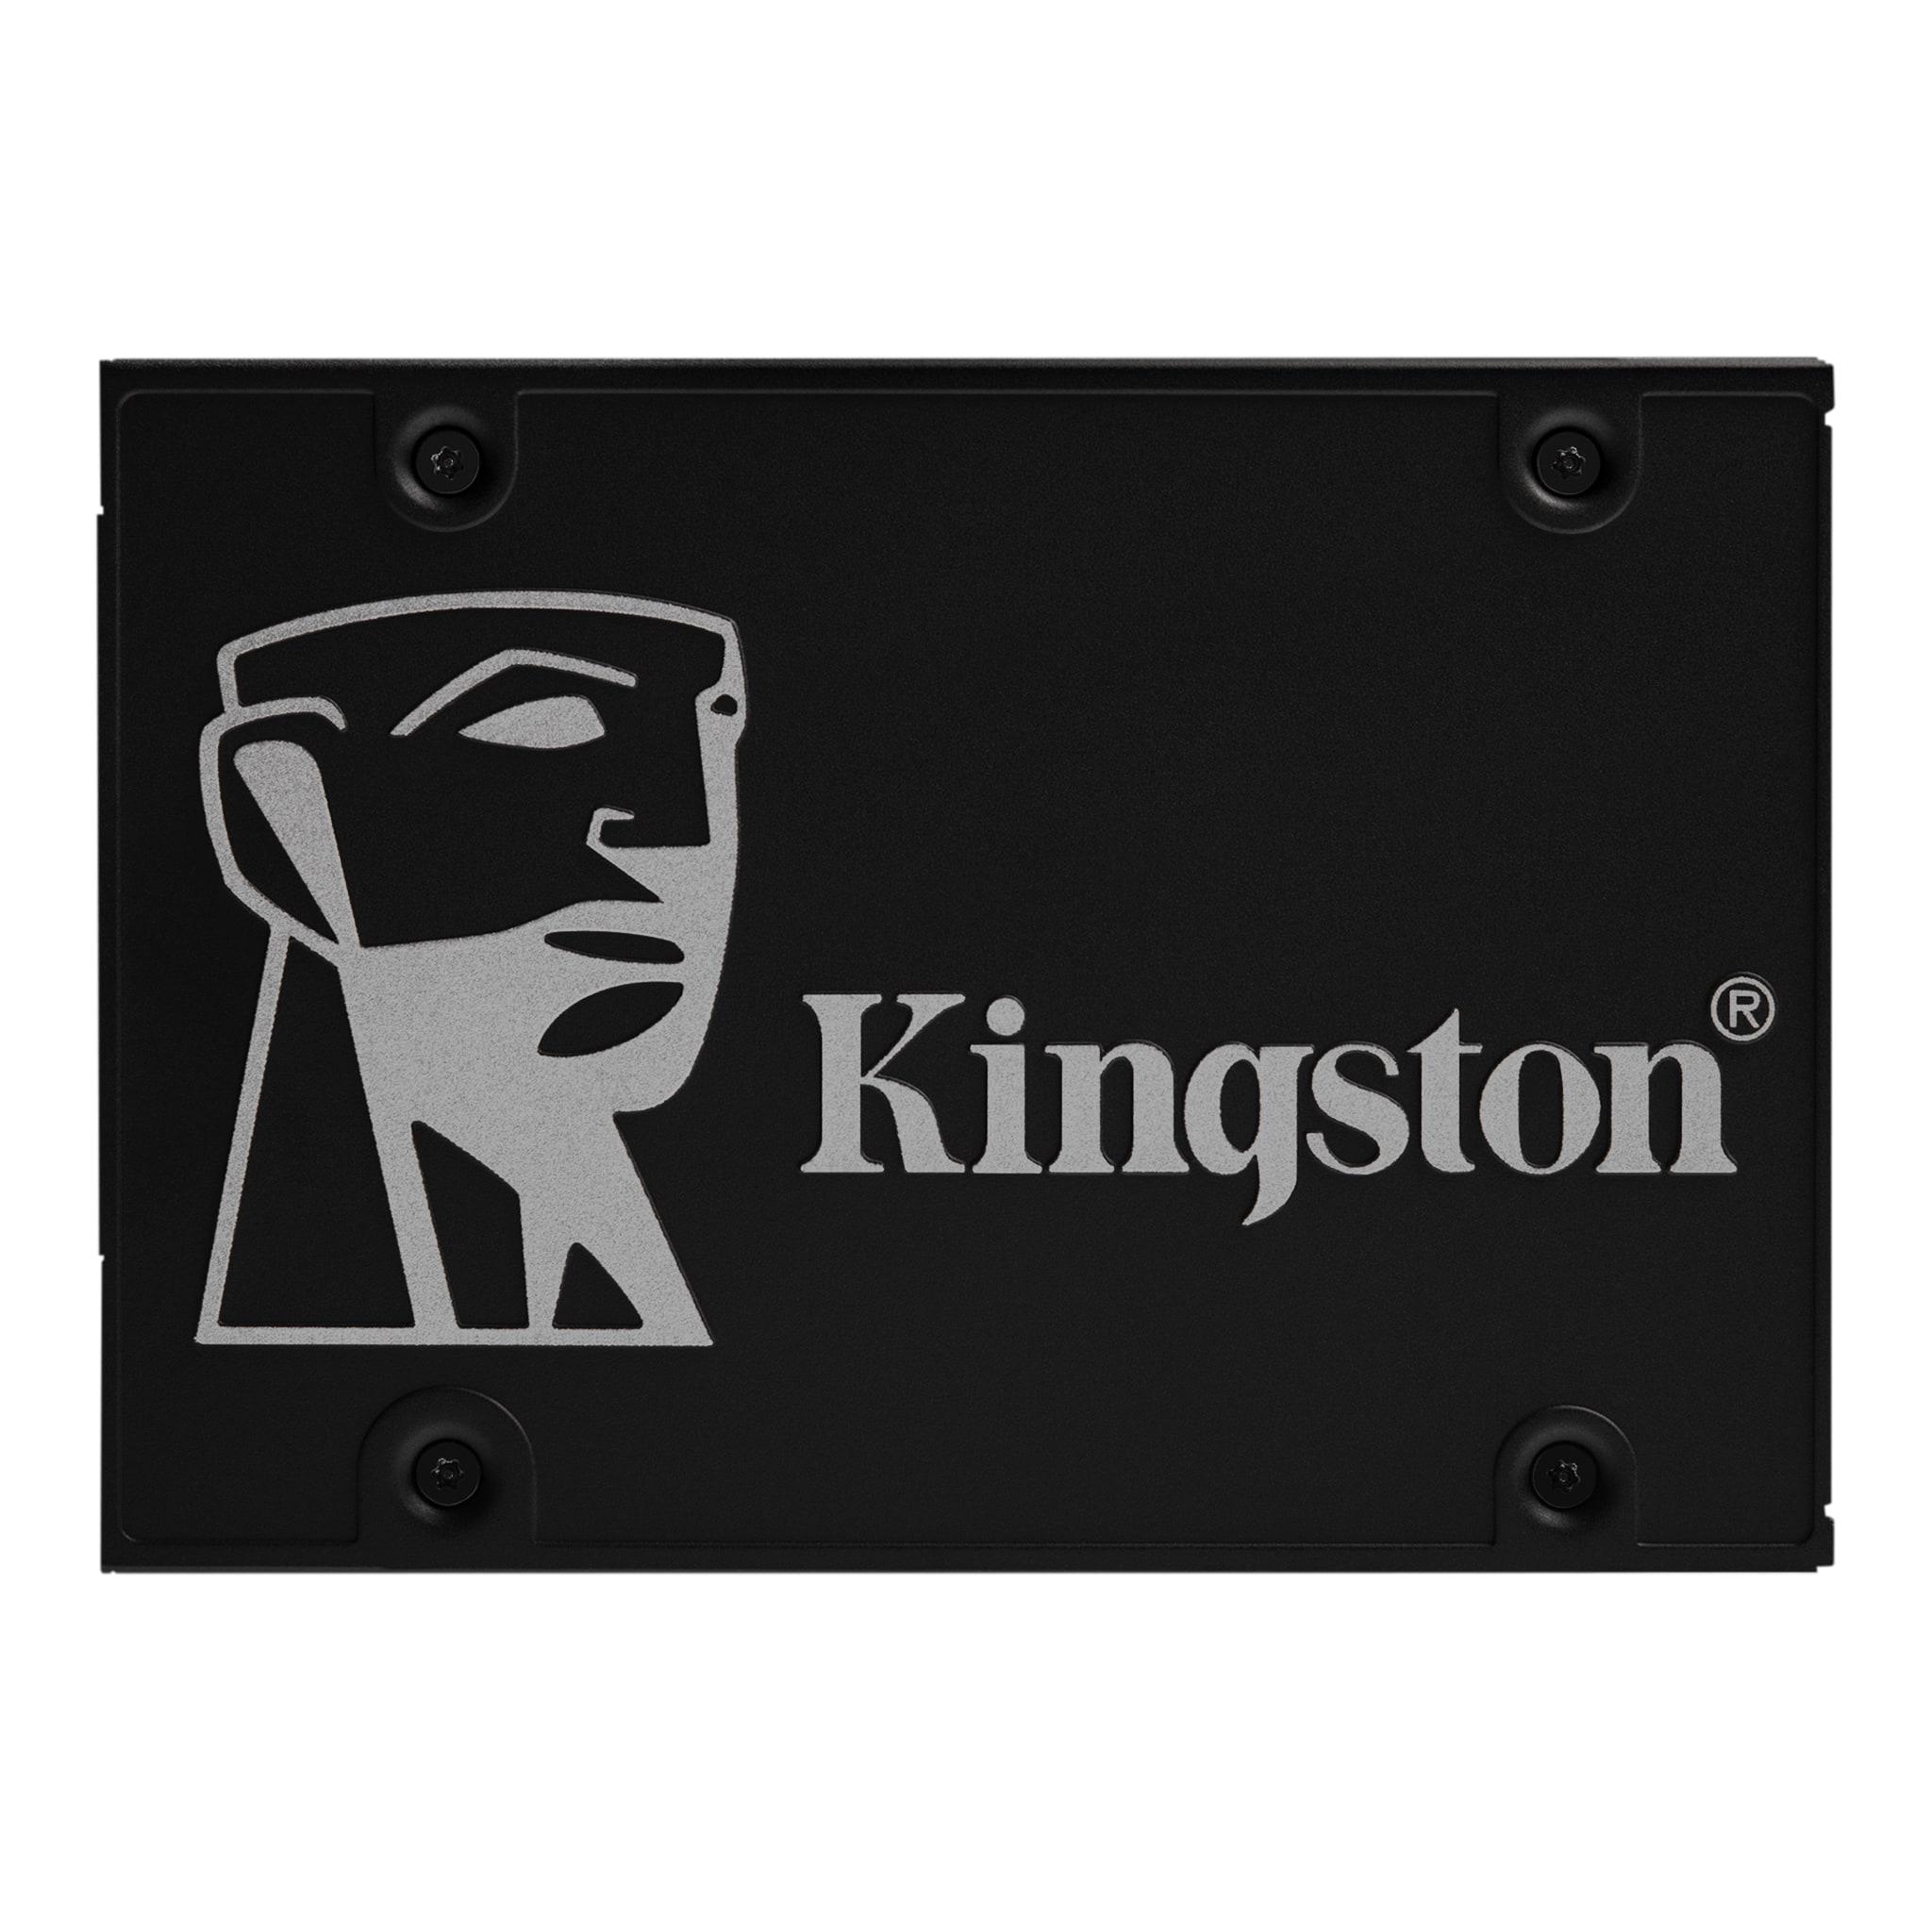 Solid State Drive (SSD) Kingston KC600 2 TB